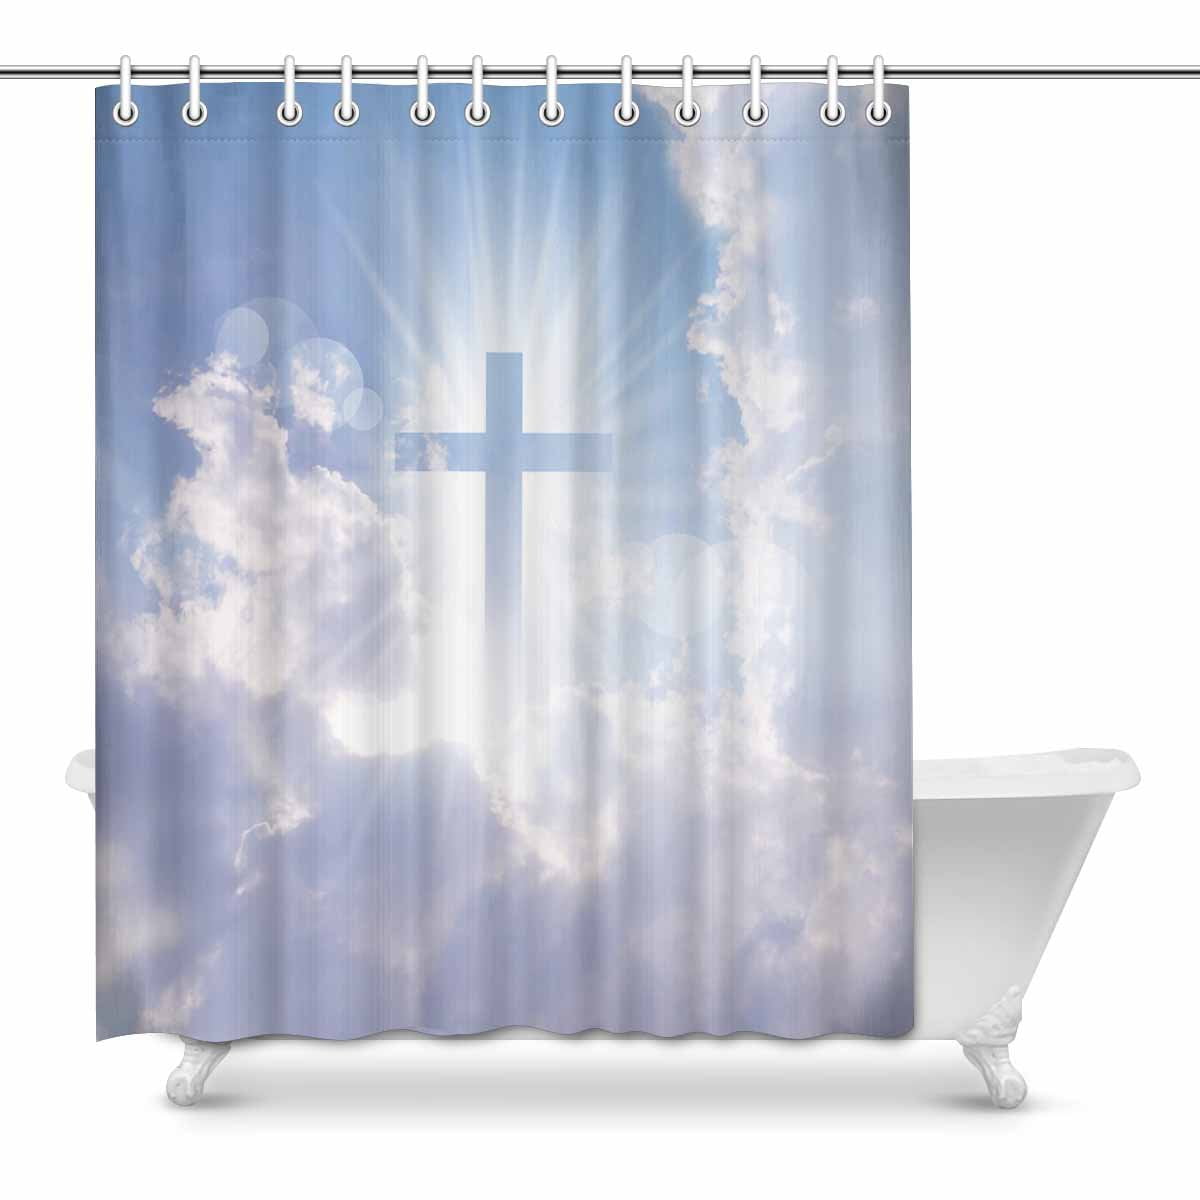 Three Kings Jesus Bath Accessory Sets Waterproof Fabric Shower Curtain Hooks 72" 